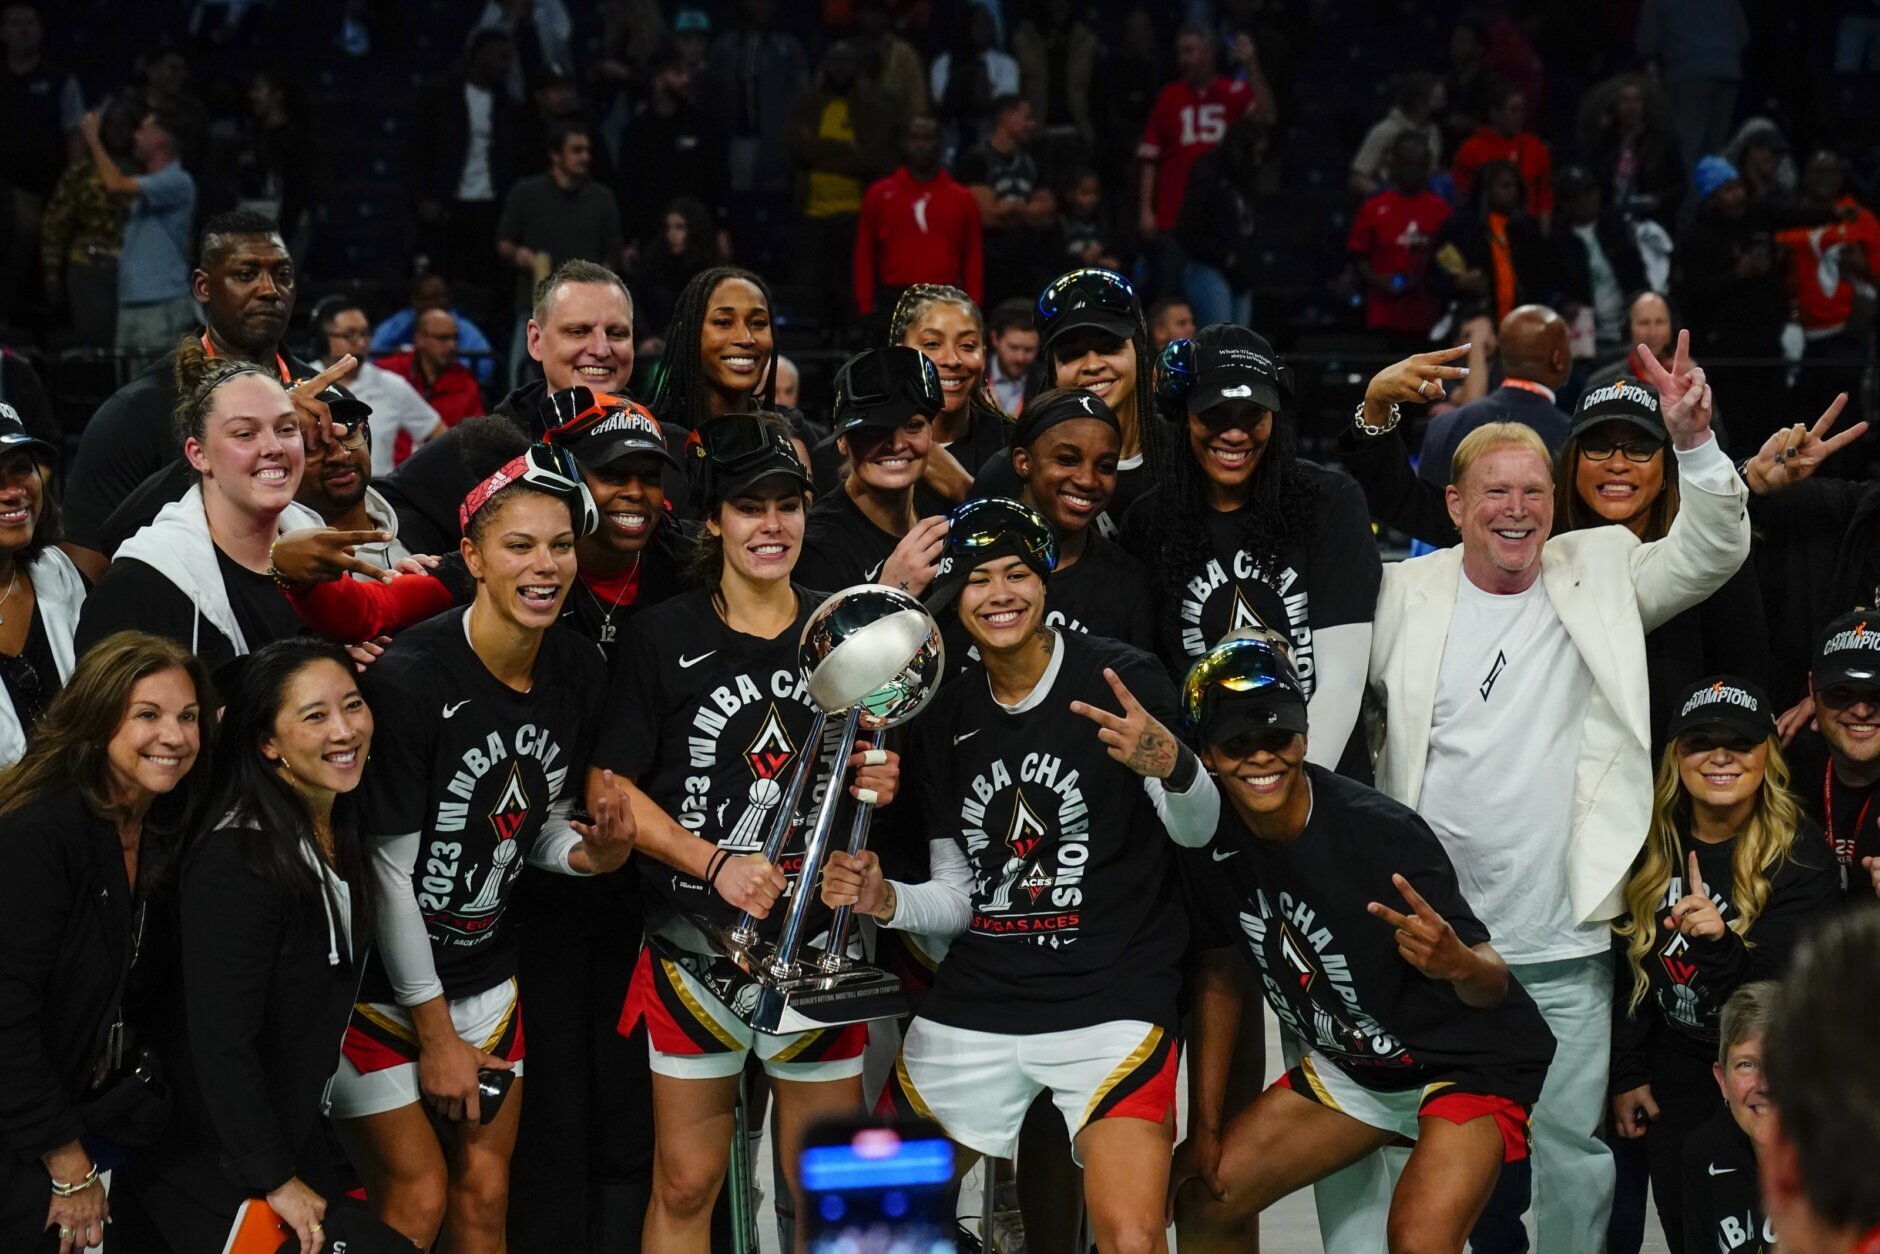 Las Vegas Aces 2023 WNBA Champions CUSTOM Baseball Jersey